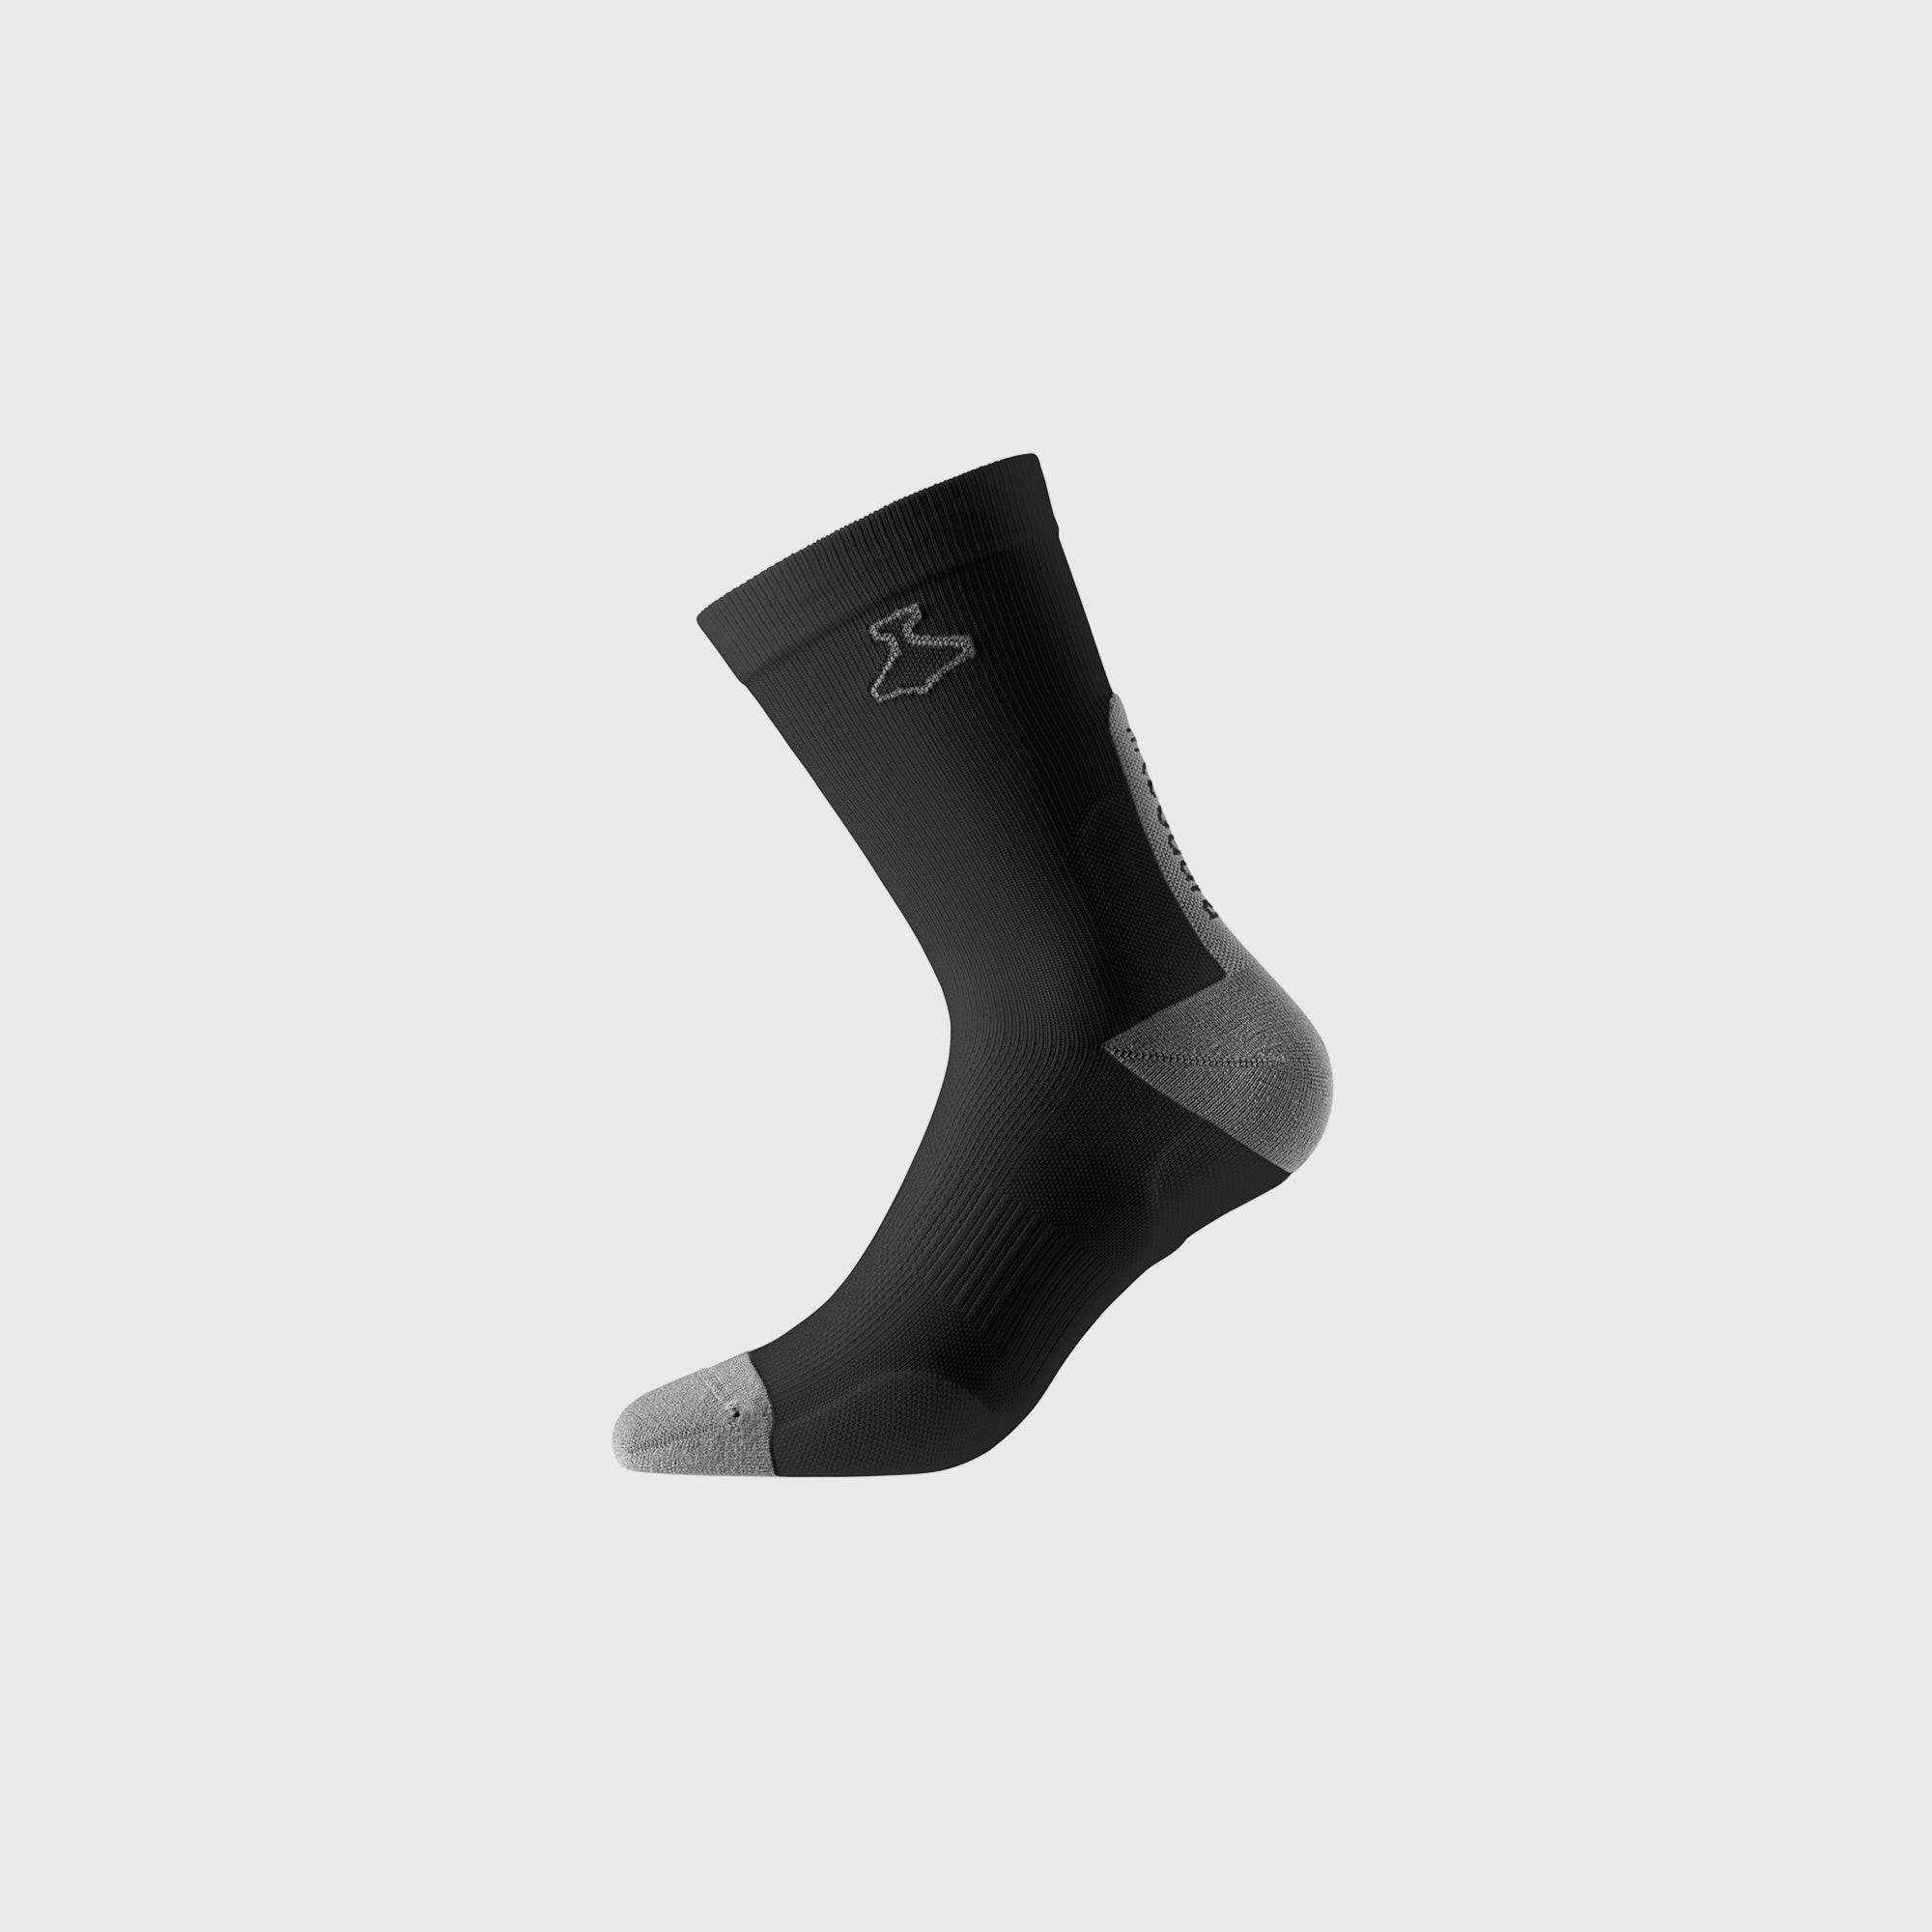 Liiteguard ULTRALIGHT Medium socks BLACK